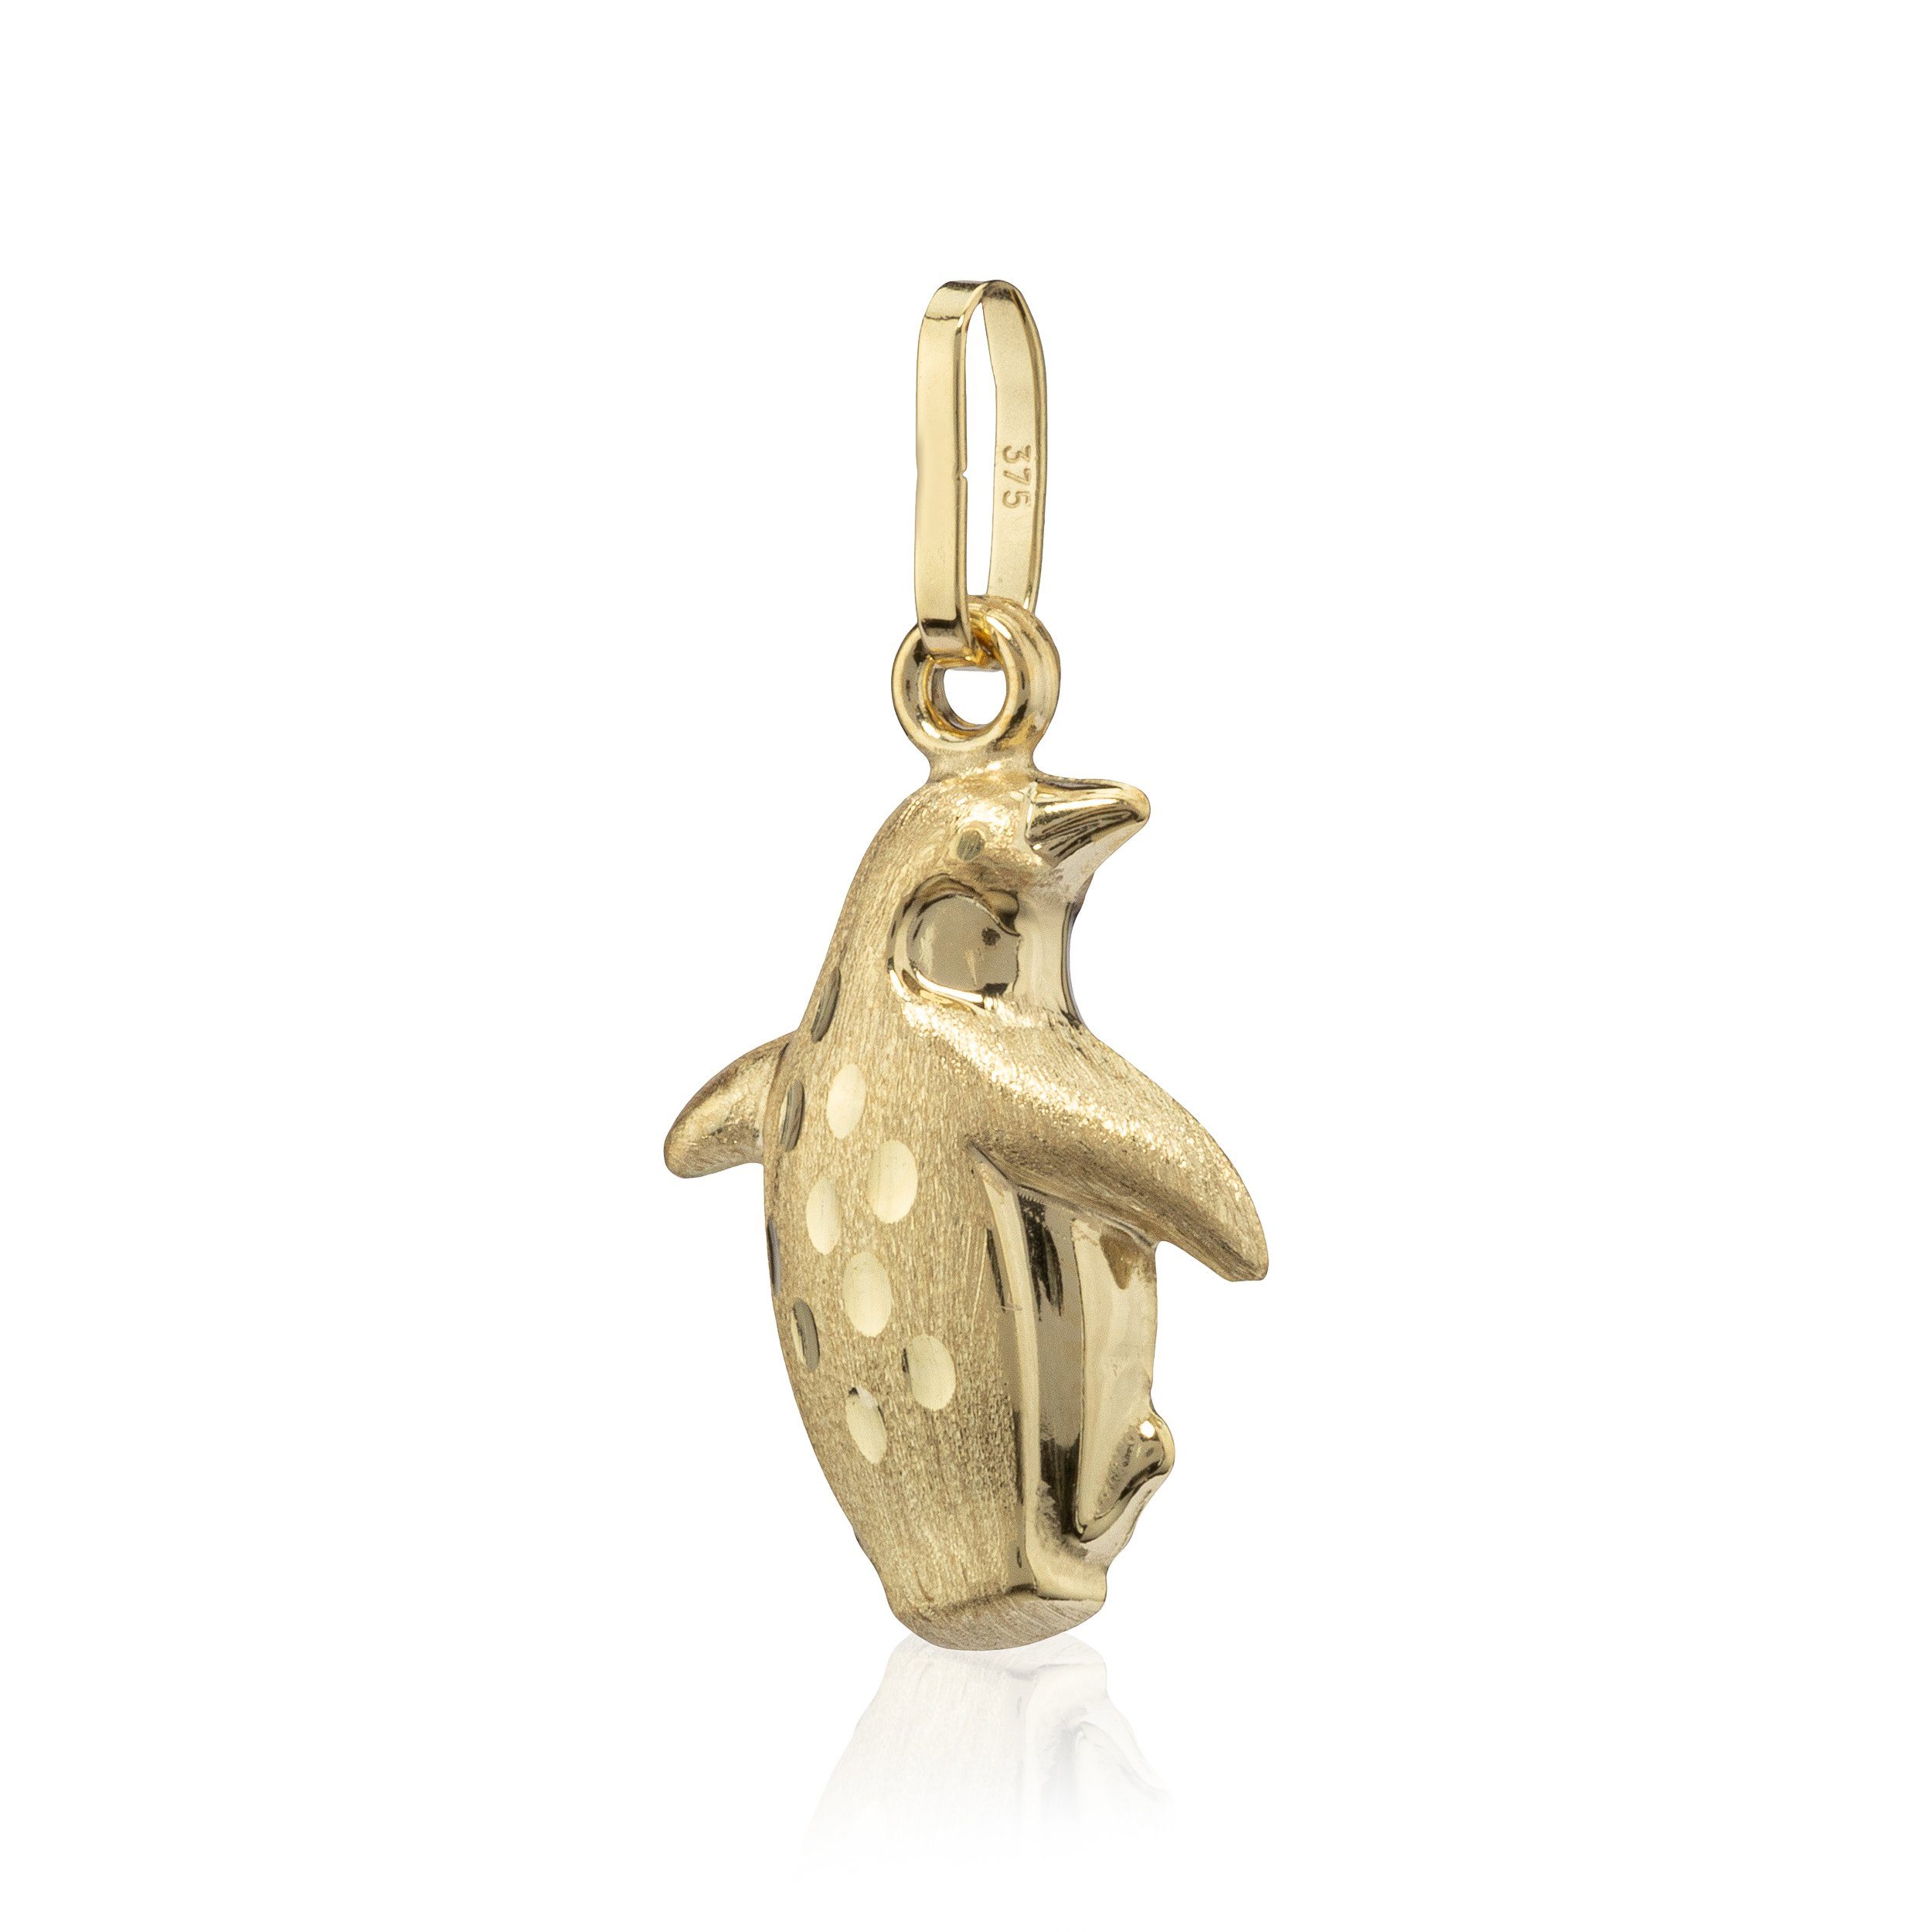 NKlaus Kettenanhänger Pinguine klein 16,4mm 375 Gelb Gold Kettenanhänger